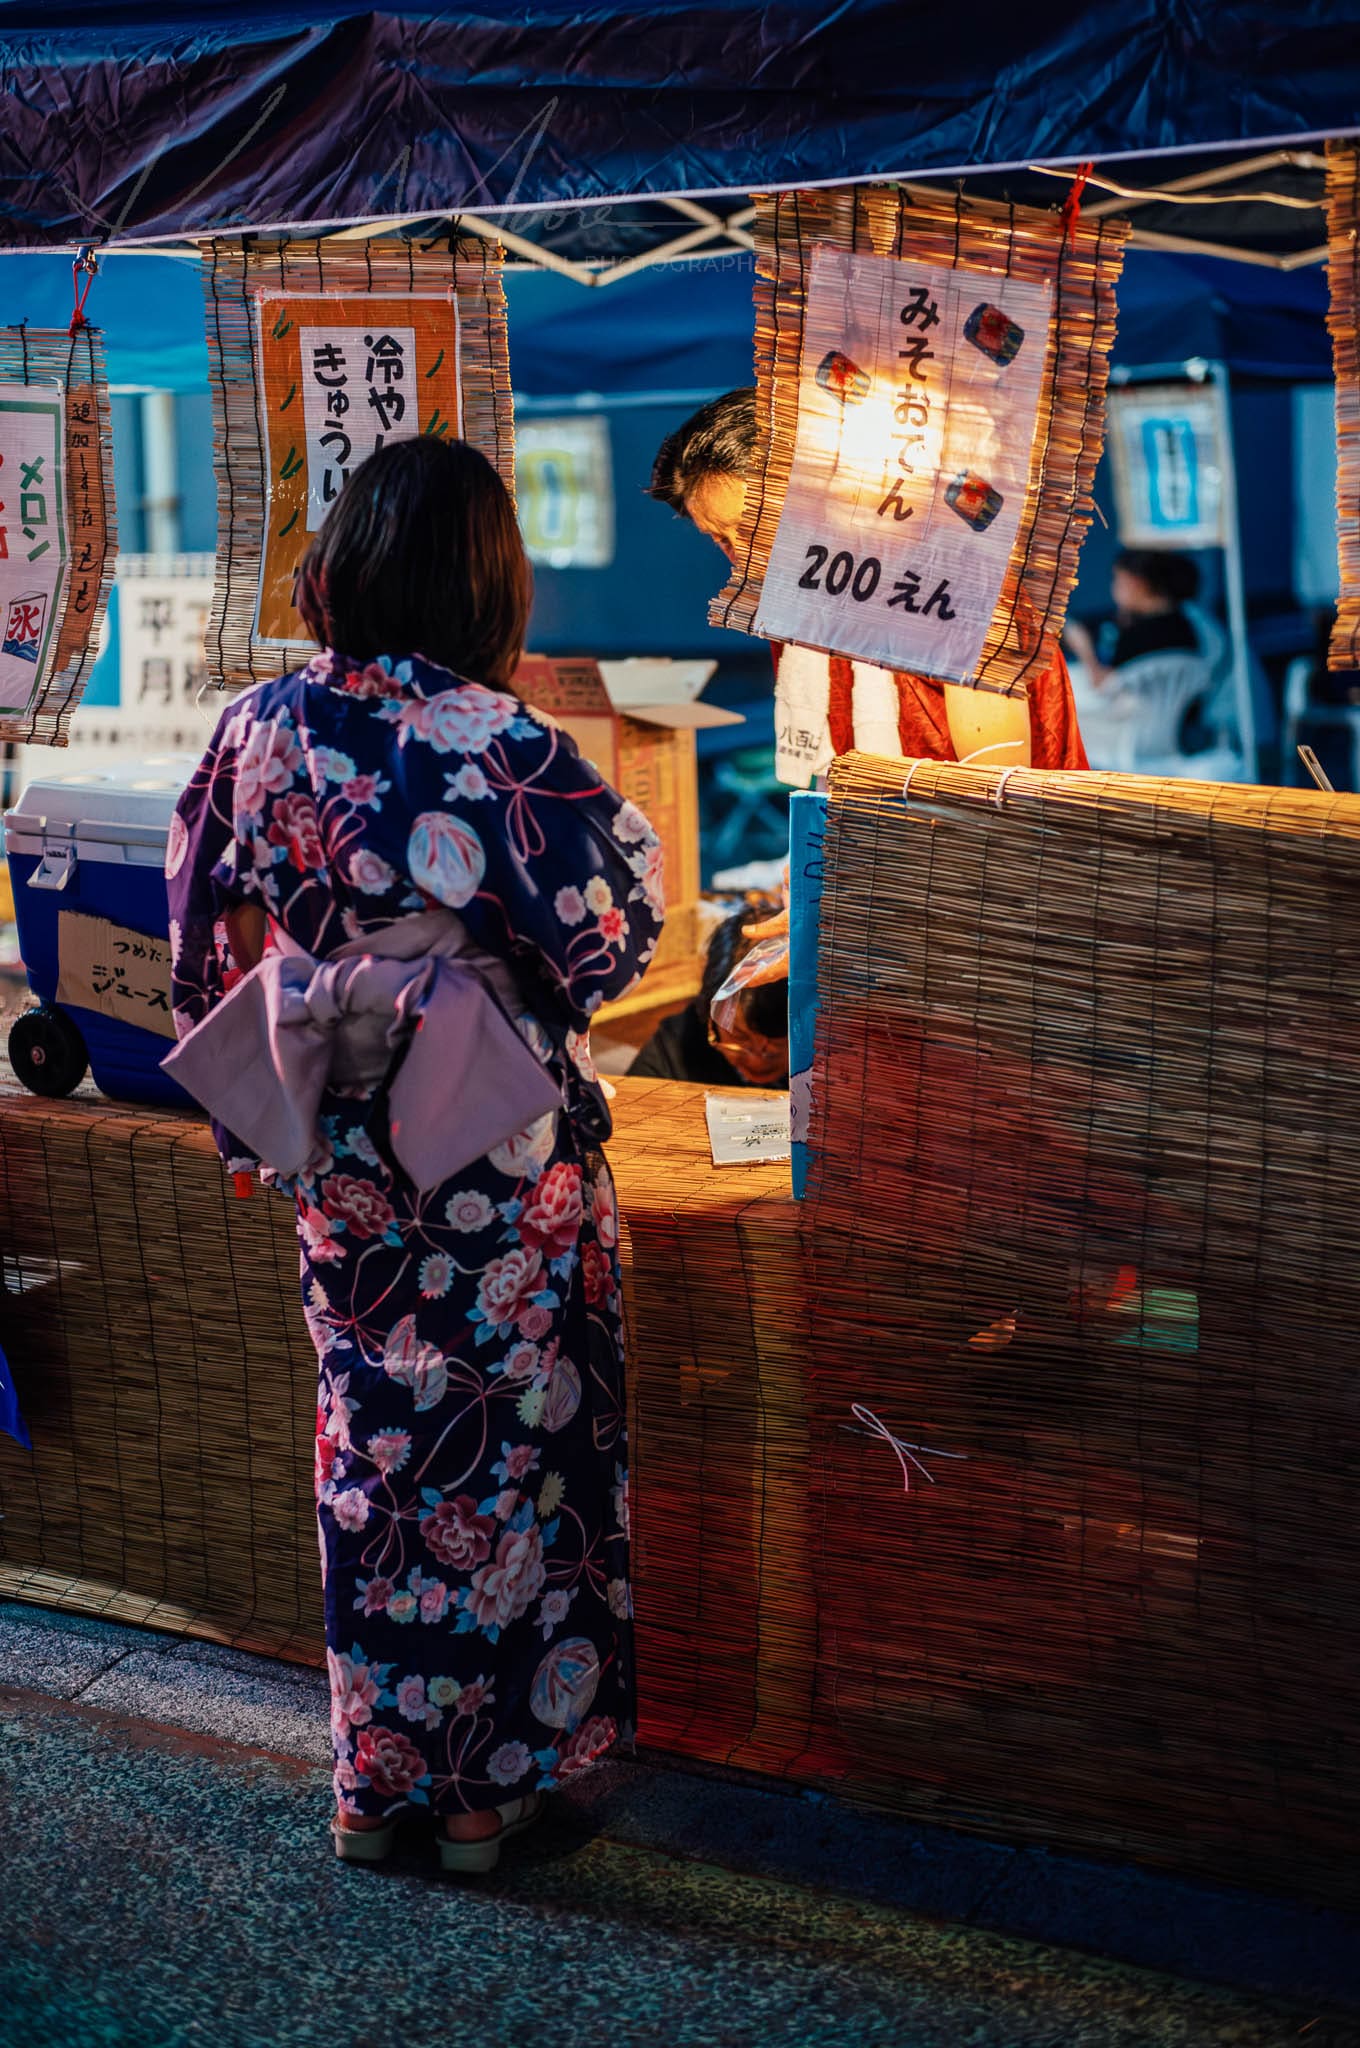 Person in Yukata Shopping at Illuminated Japanese Market Stall in Dusk Setting